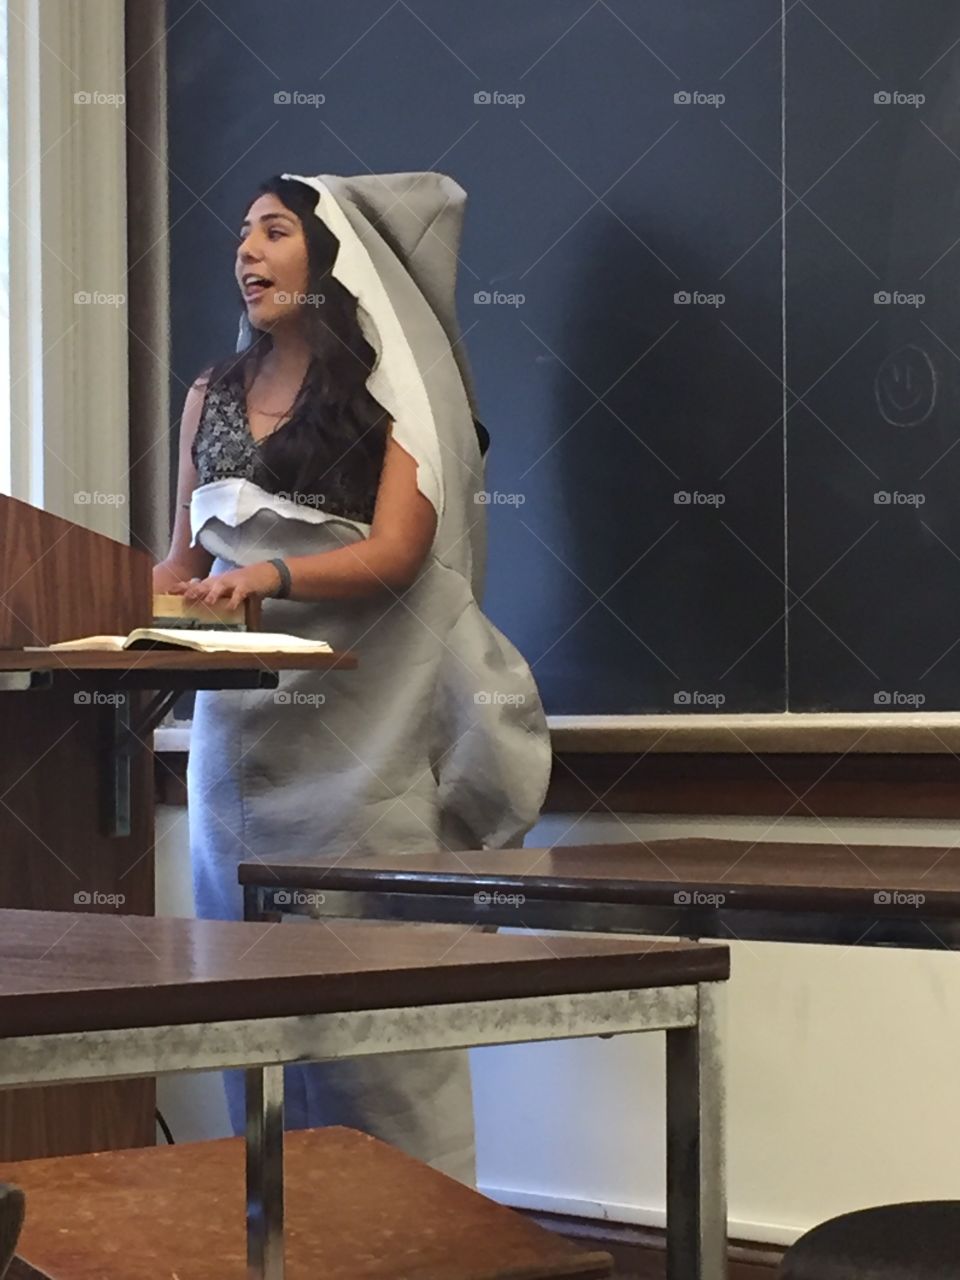 Shark presentation